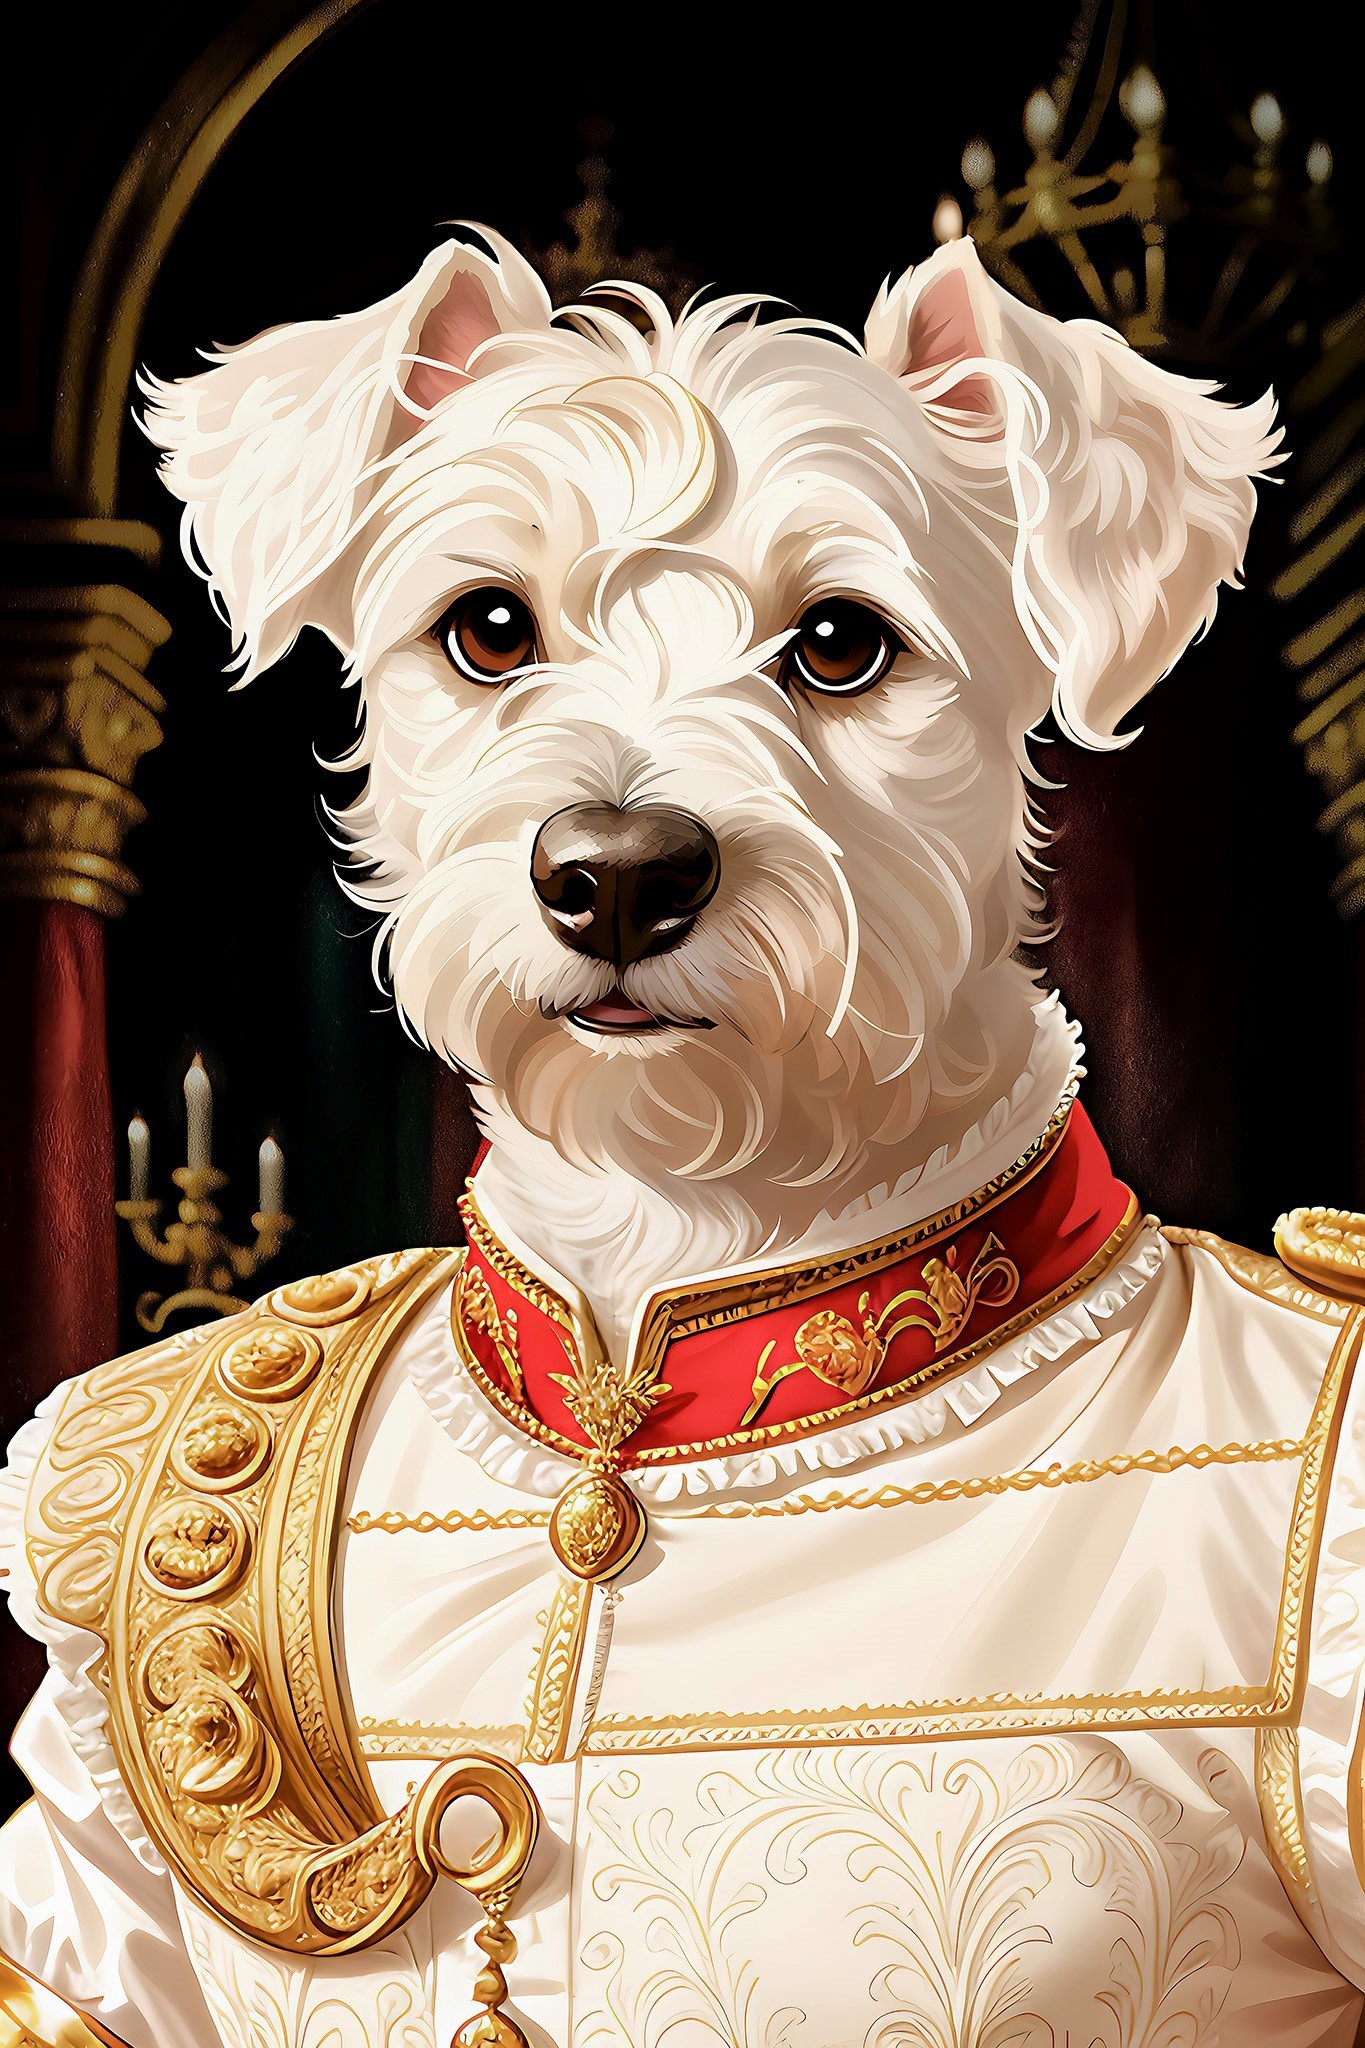 Prince Charming dog portrait